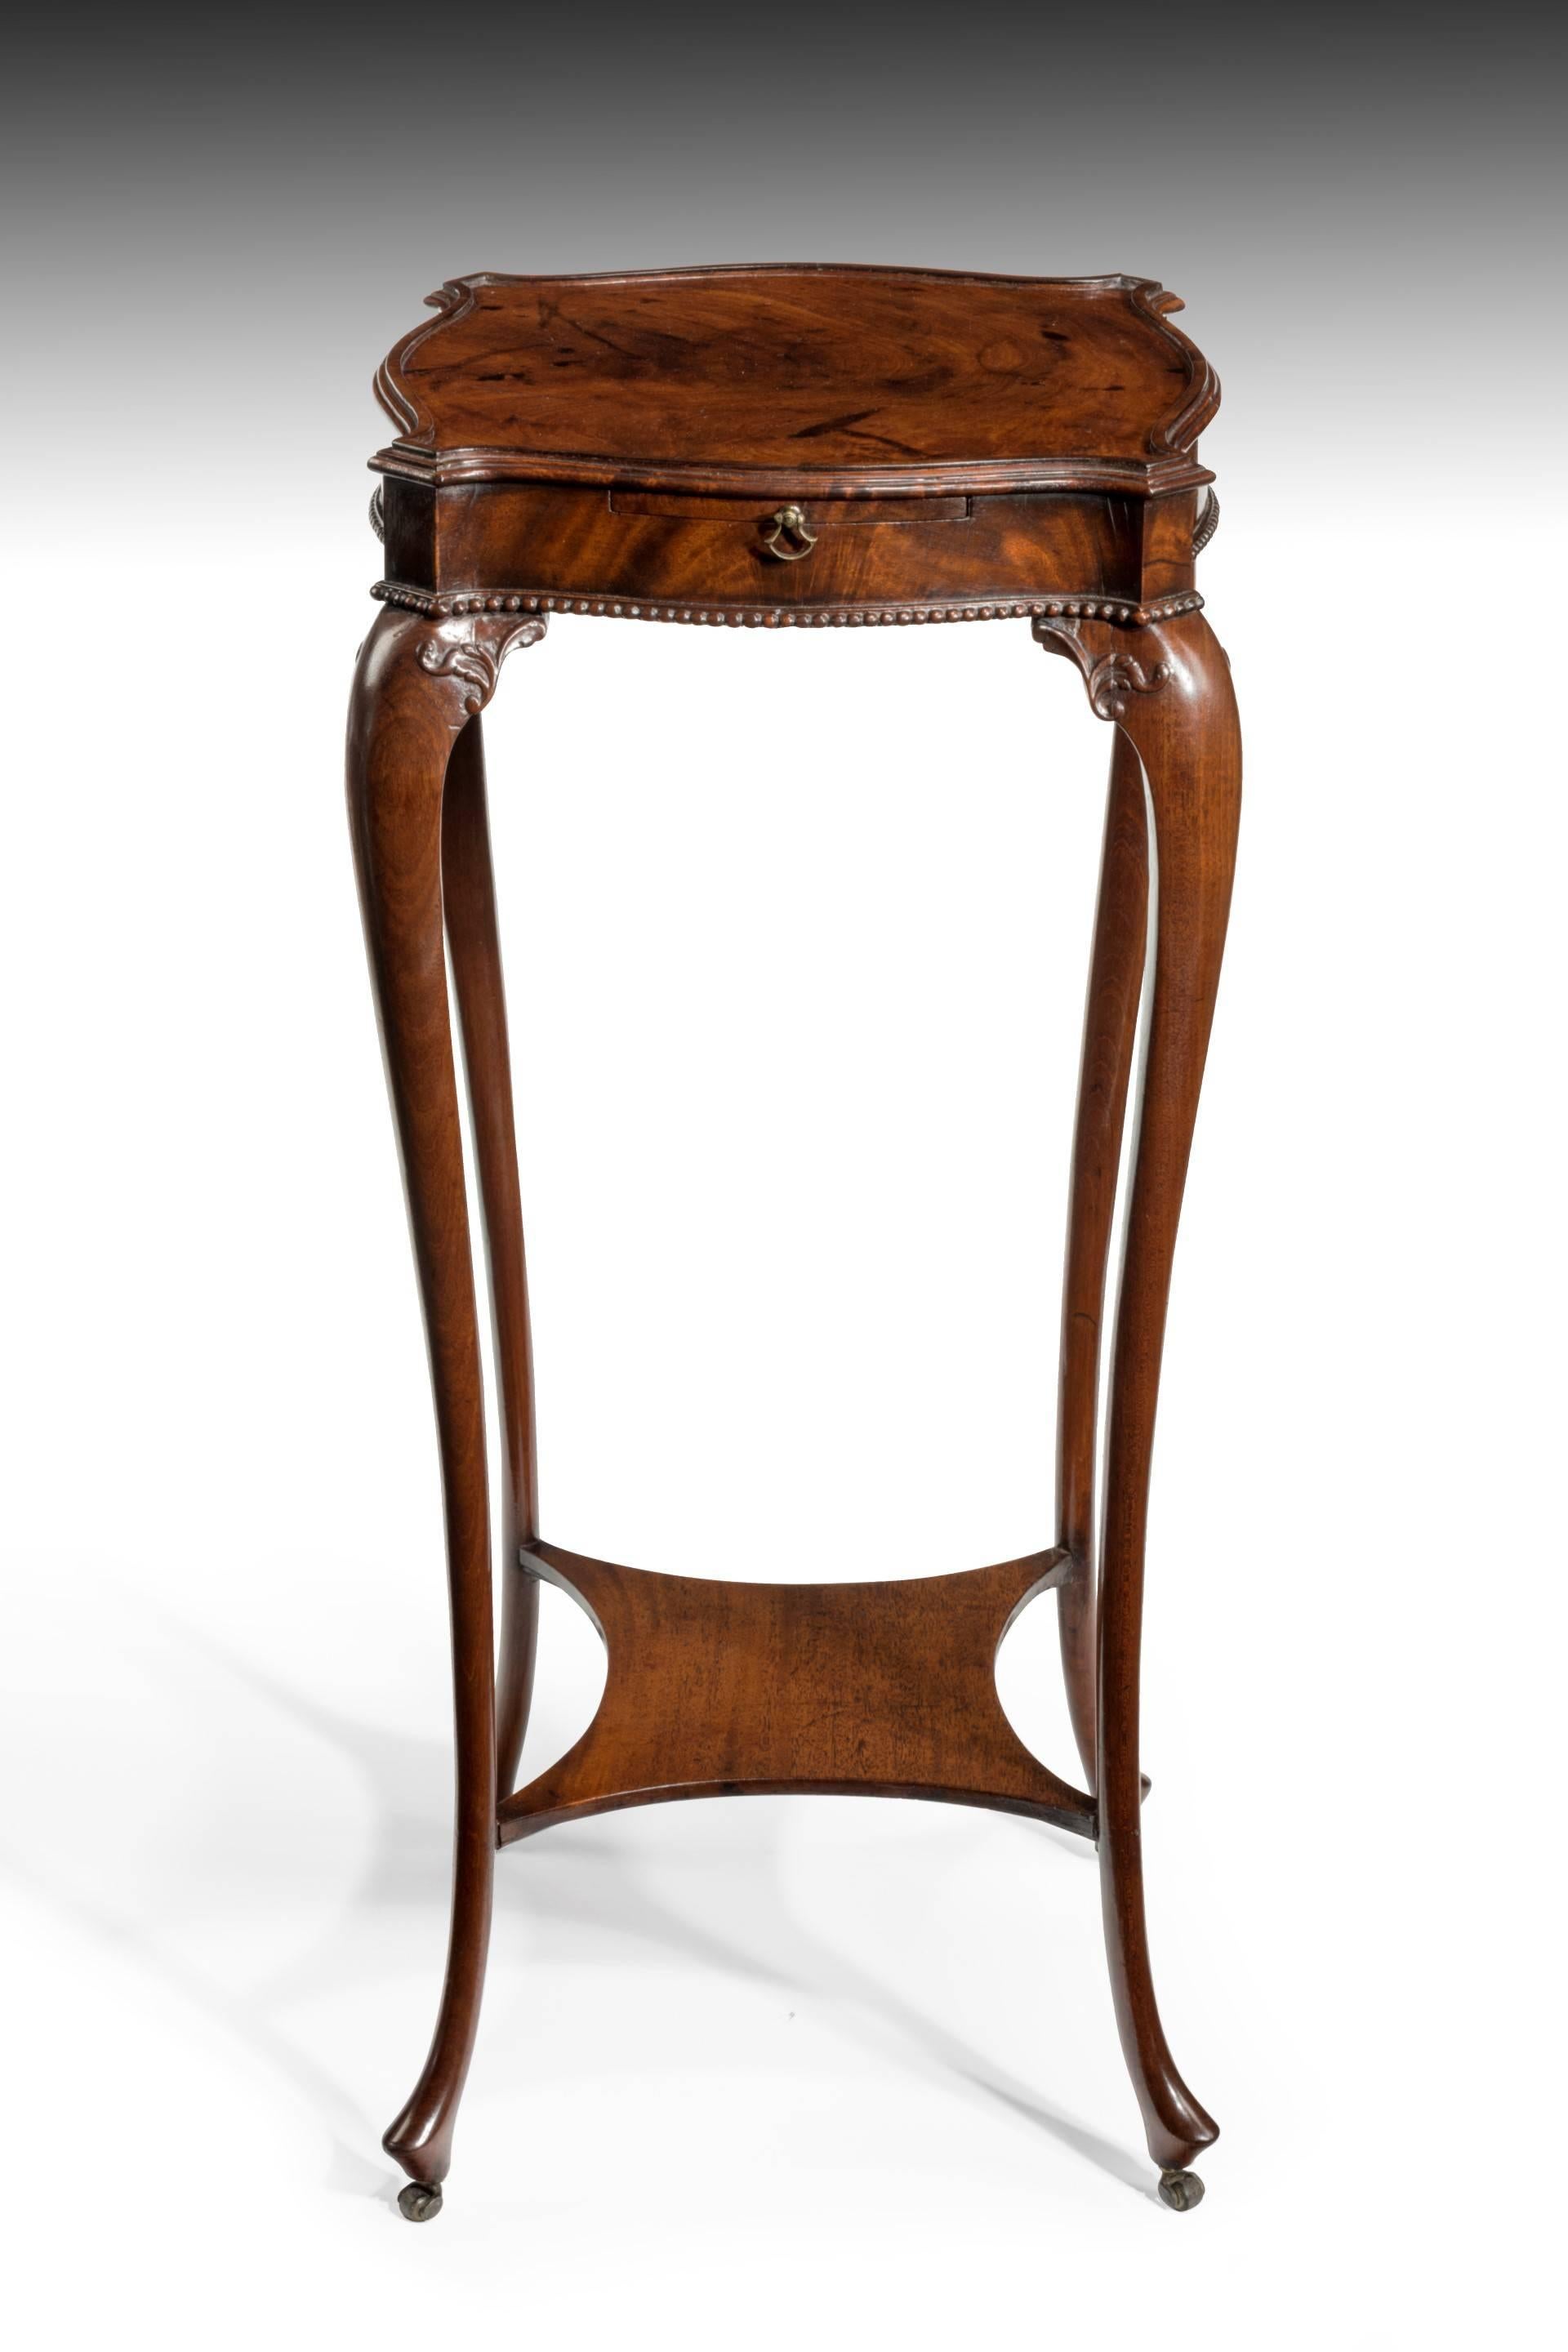 Carved George III Period Mahogany Urn Table